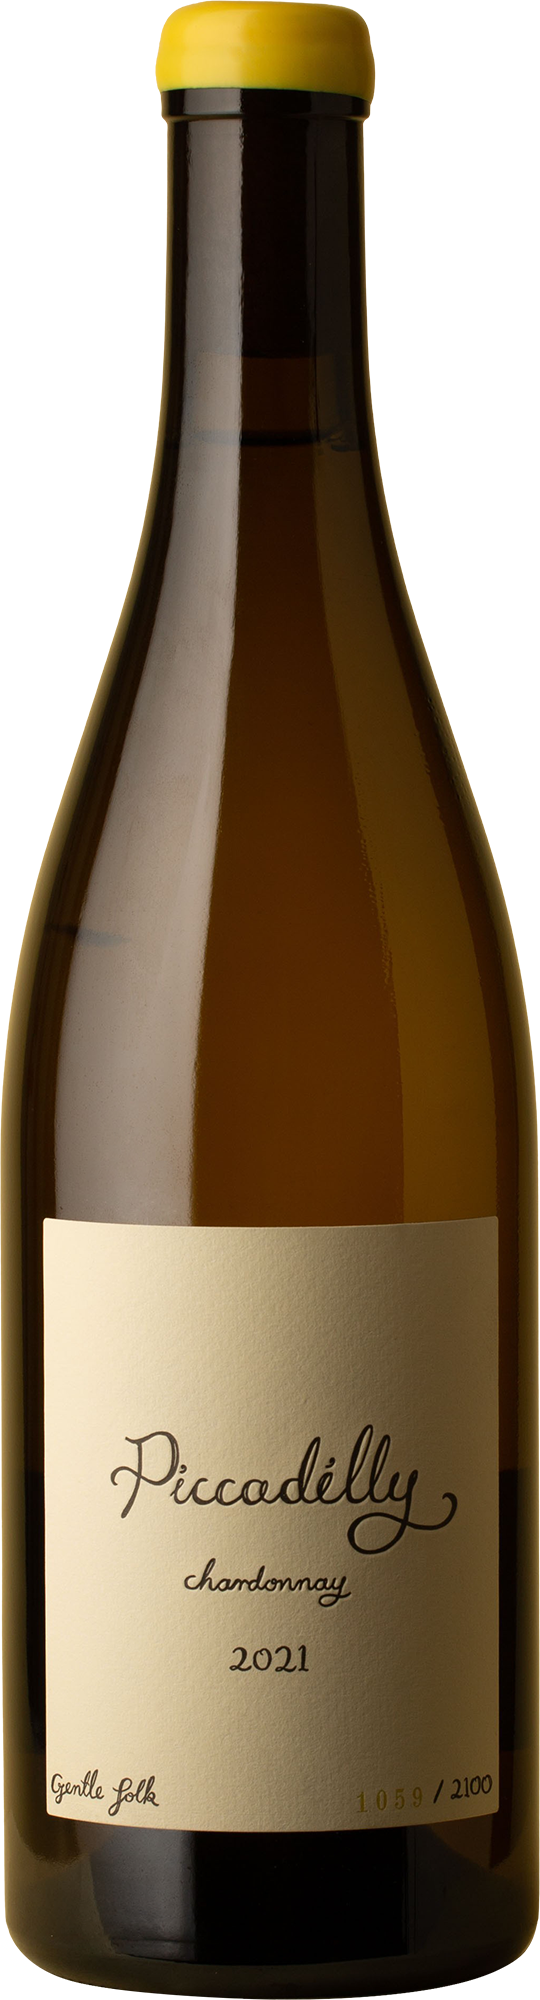 Gentle Folk - Piccadilly Chardonnay 2021 White Wine